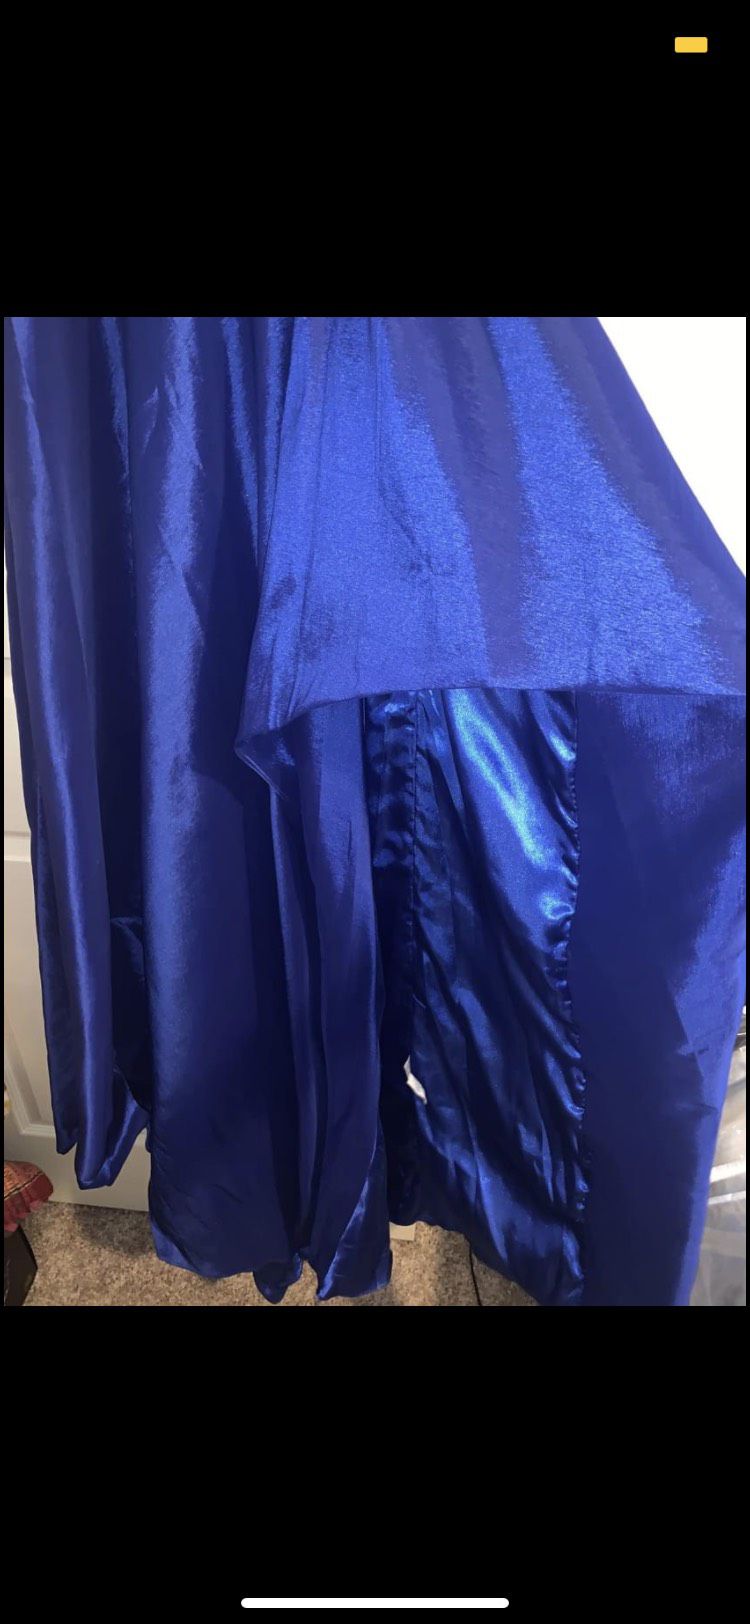 Alyce Paris Size 4 Prom Royal Blue Side Slit Dress on Queenly